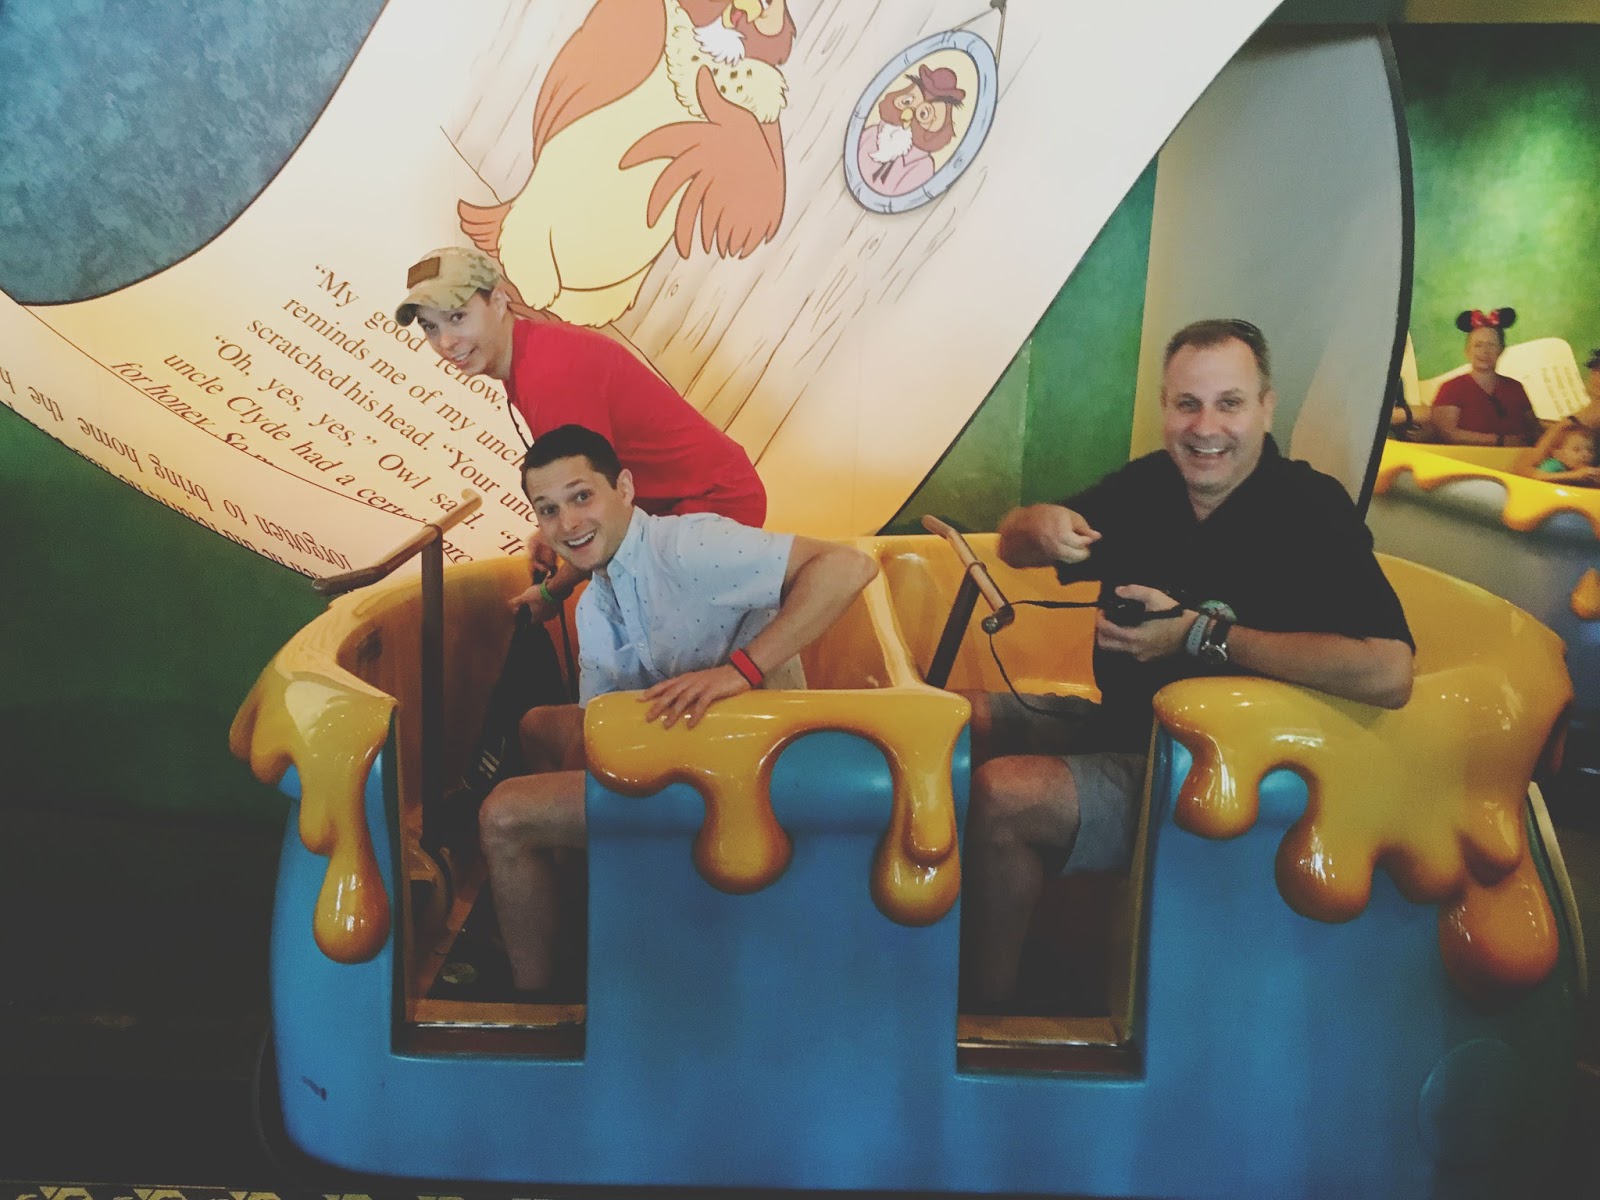 Winnie the Pooh ride at Magic Kingdom in Disney World, Florida